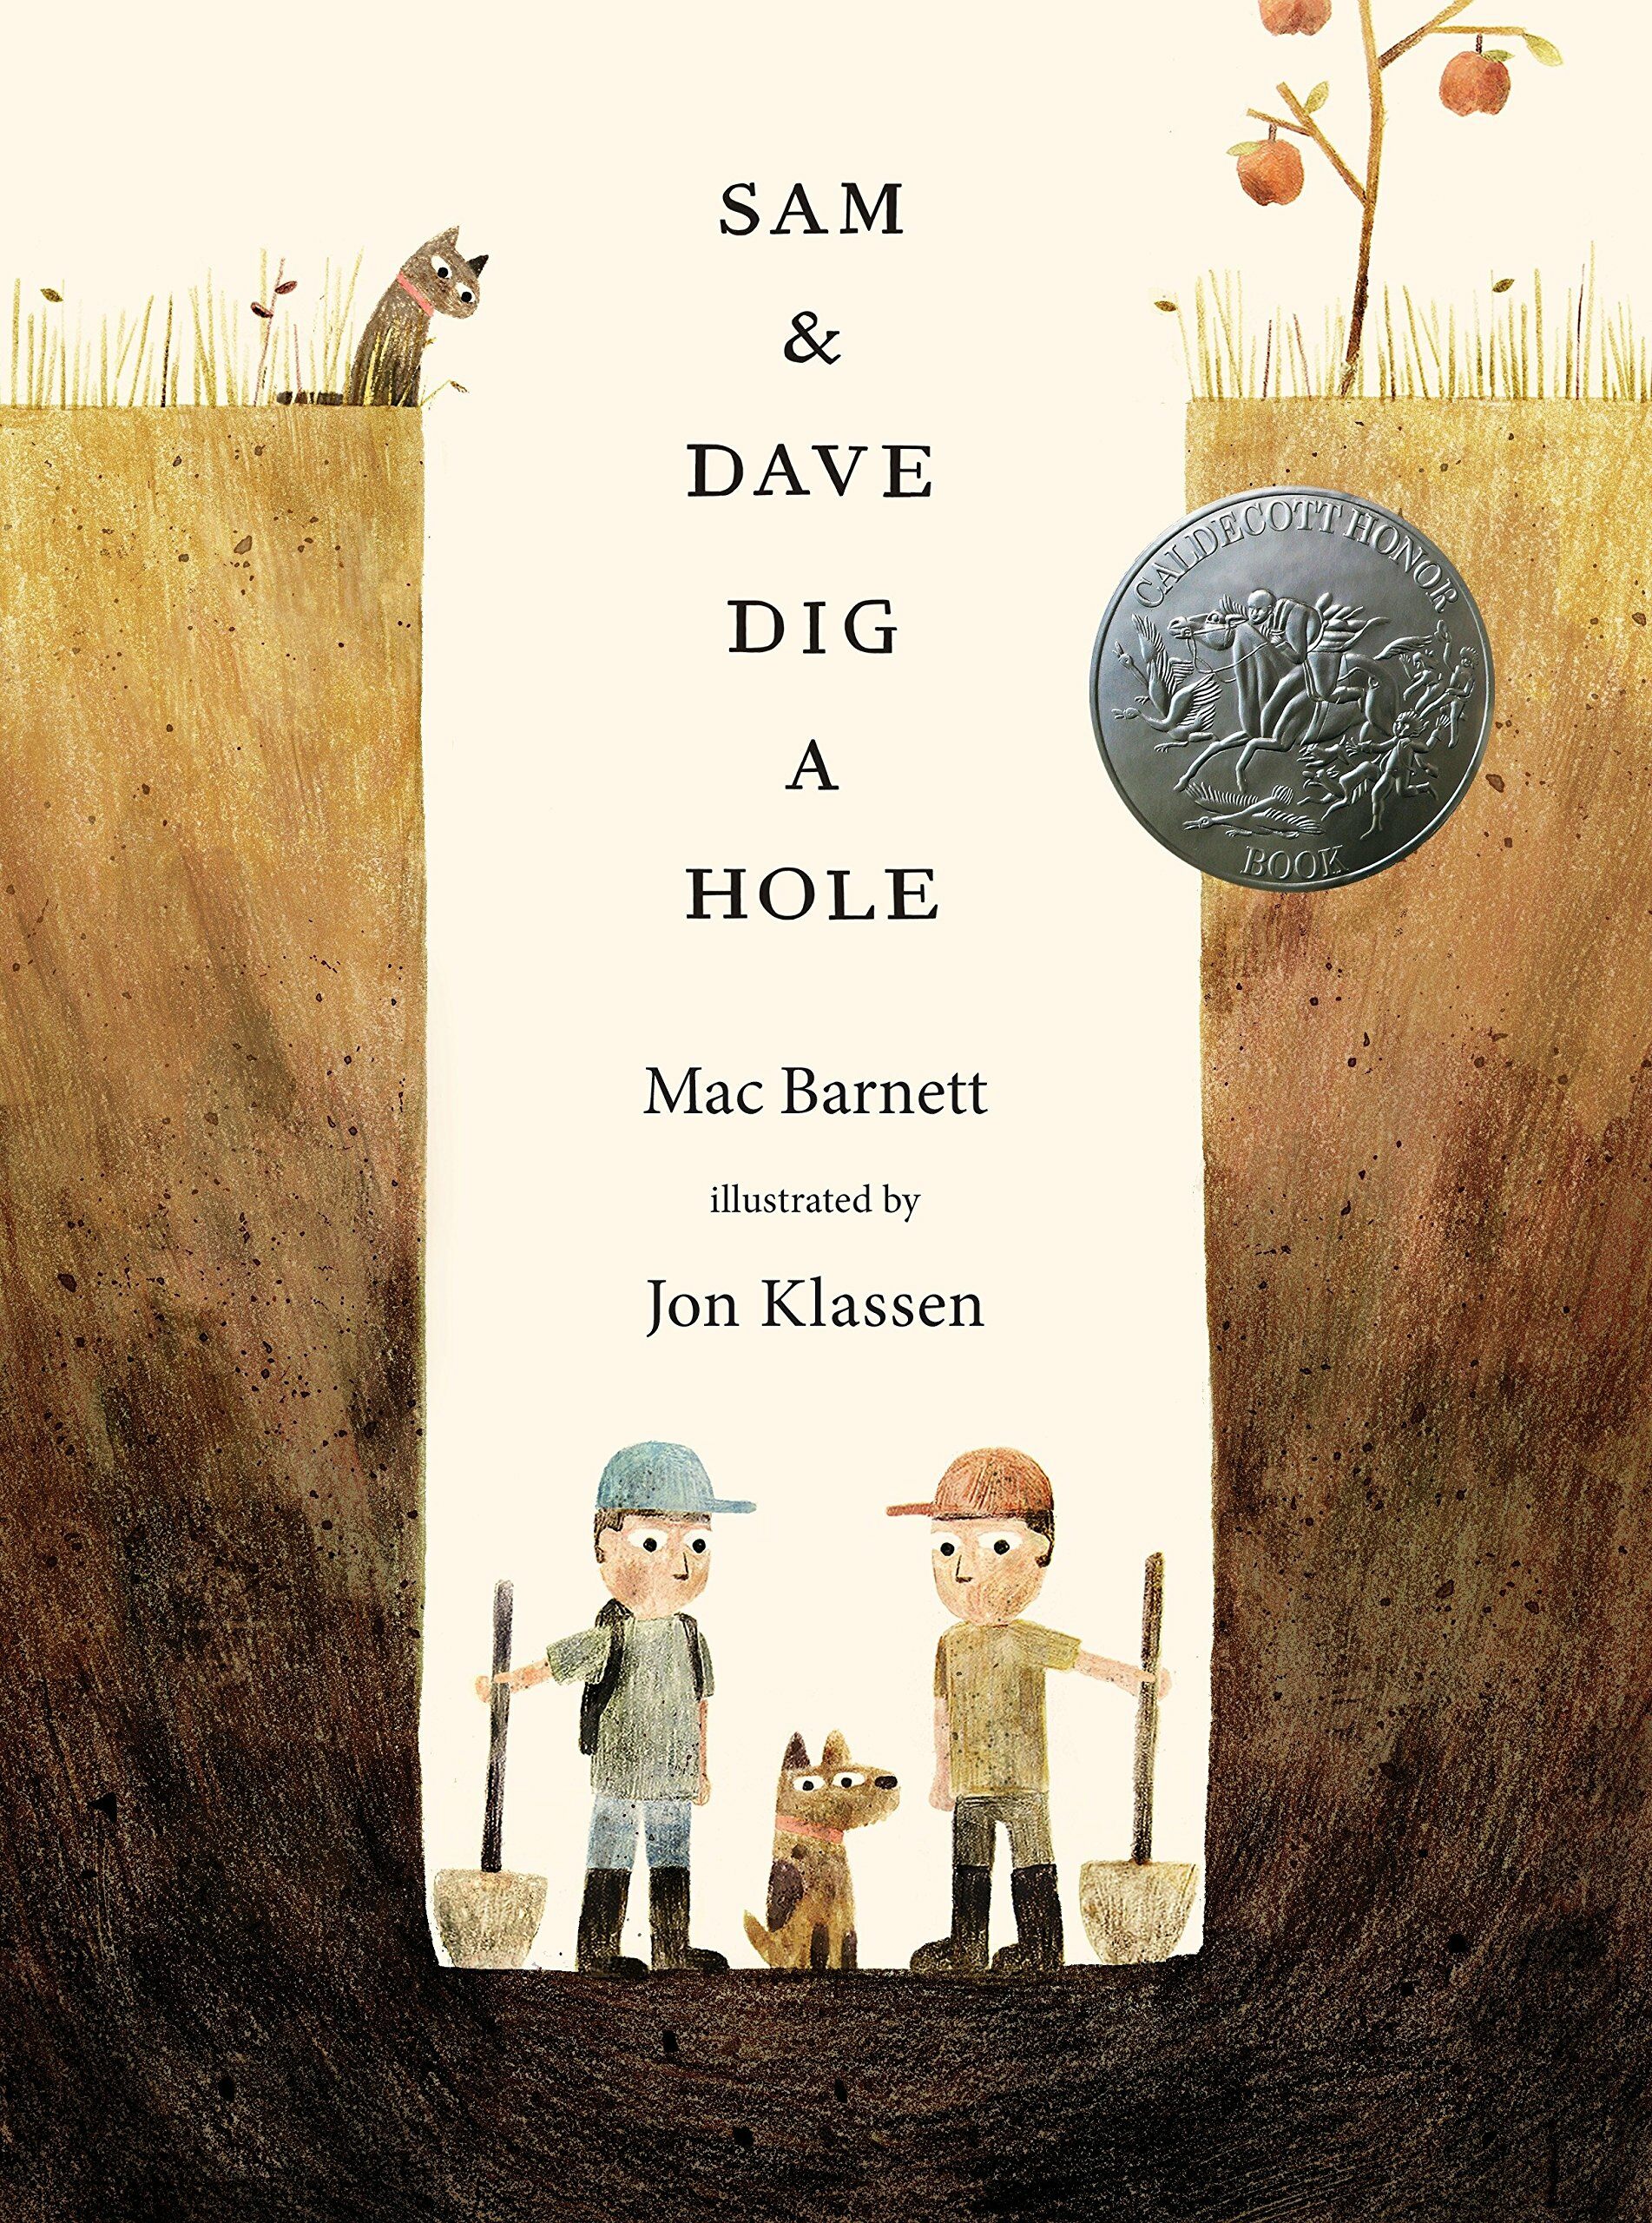 Sam & Dave dig a hole / Mac Barnett ; illustrated by Jon Klassen 표지